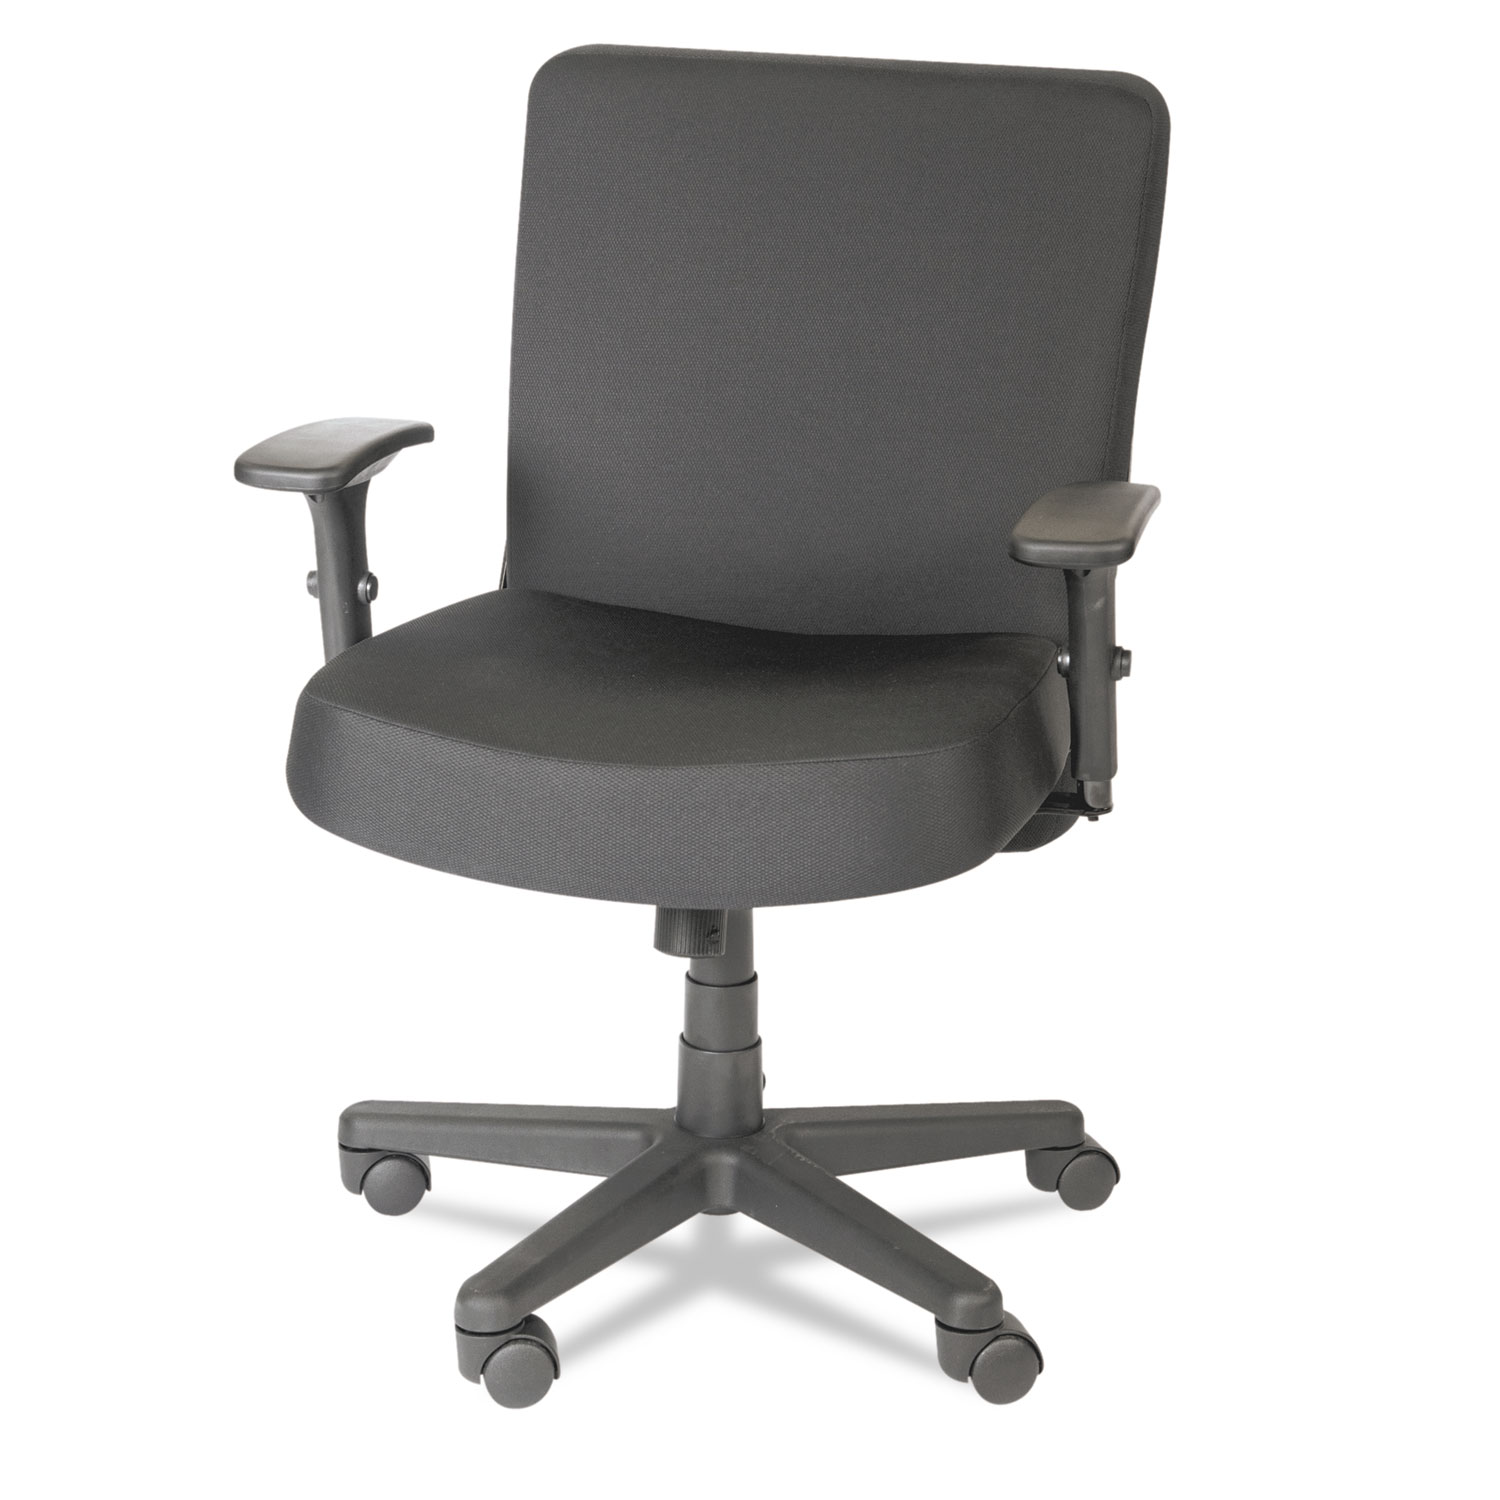  Alera ALECP210 Alera XL Series Big and Tall Mid-Back Task Chair, Supports up to 500 lbs., Black Seat/Black Back, Black Base (ALECP210) 